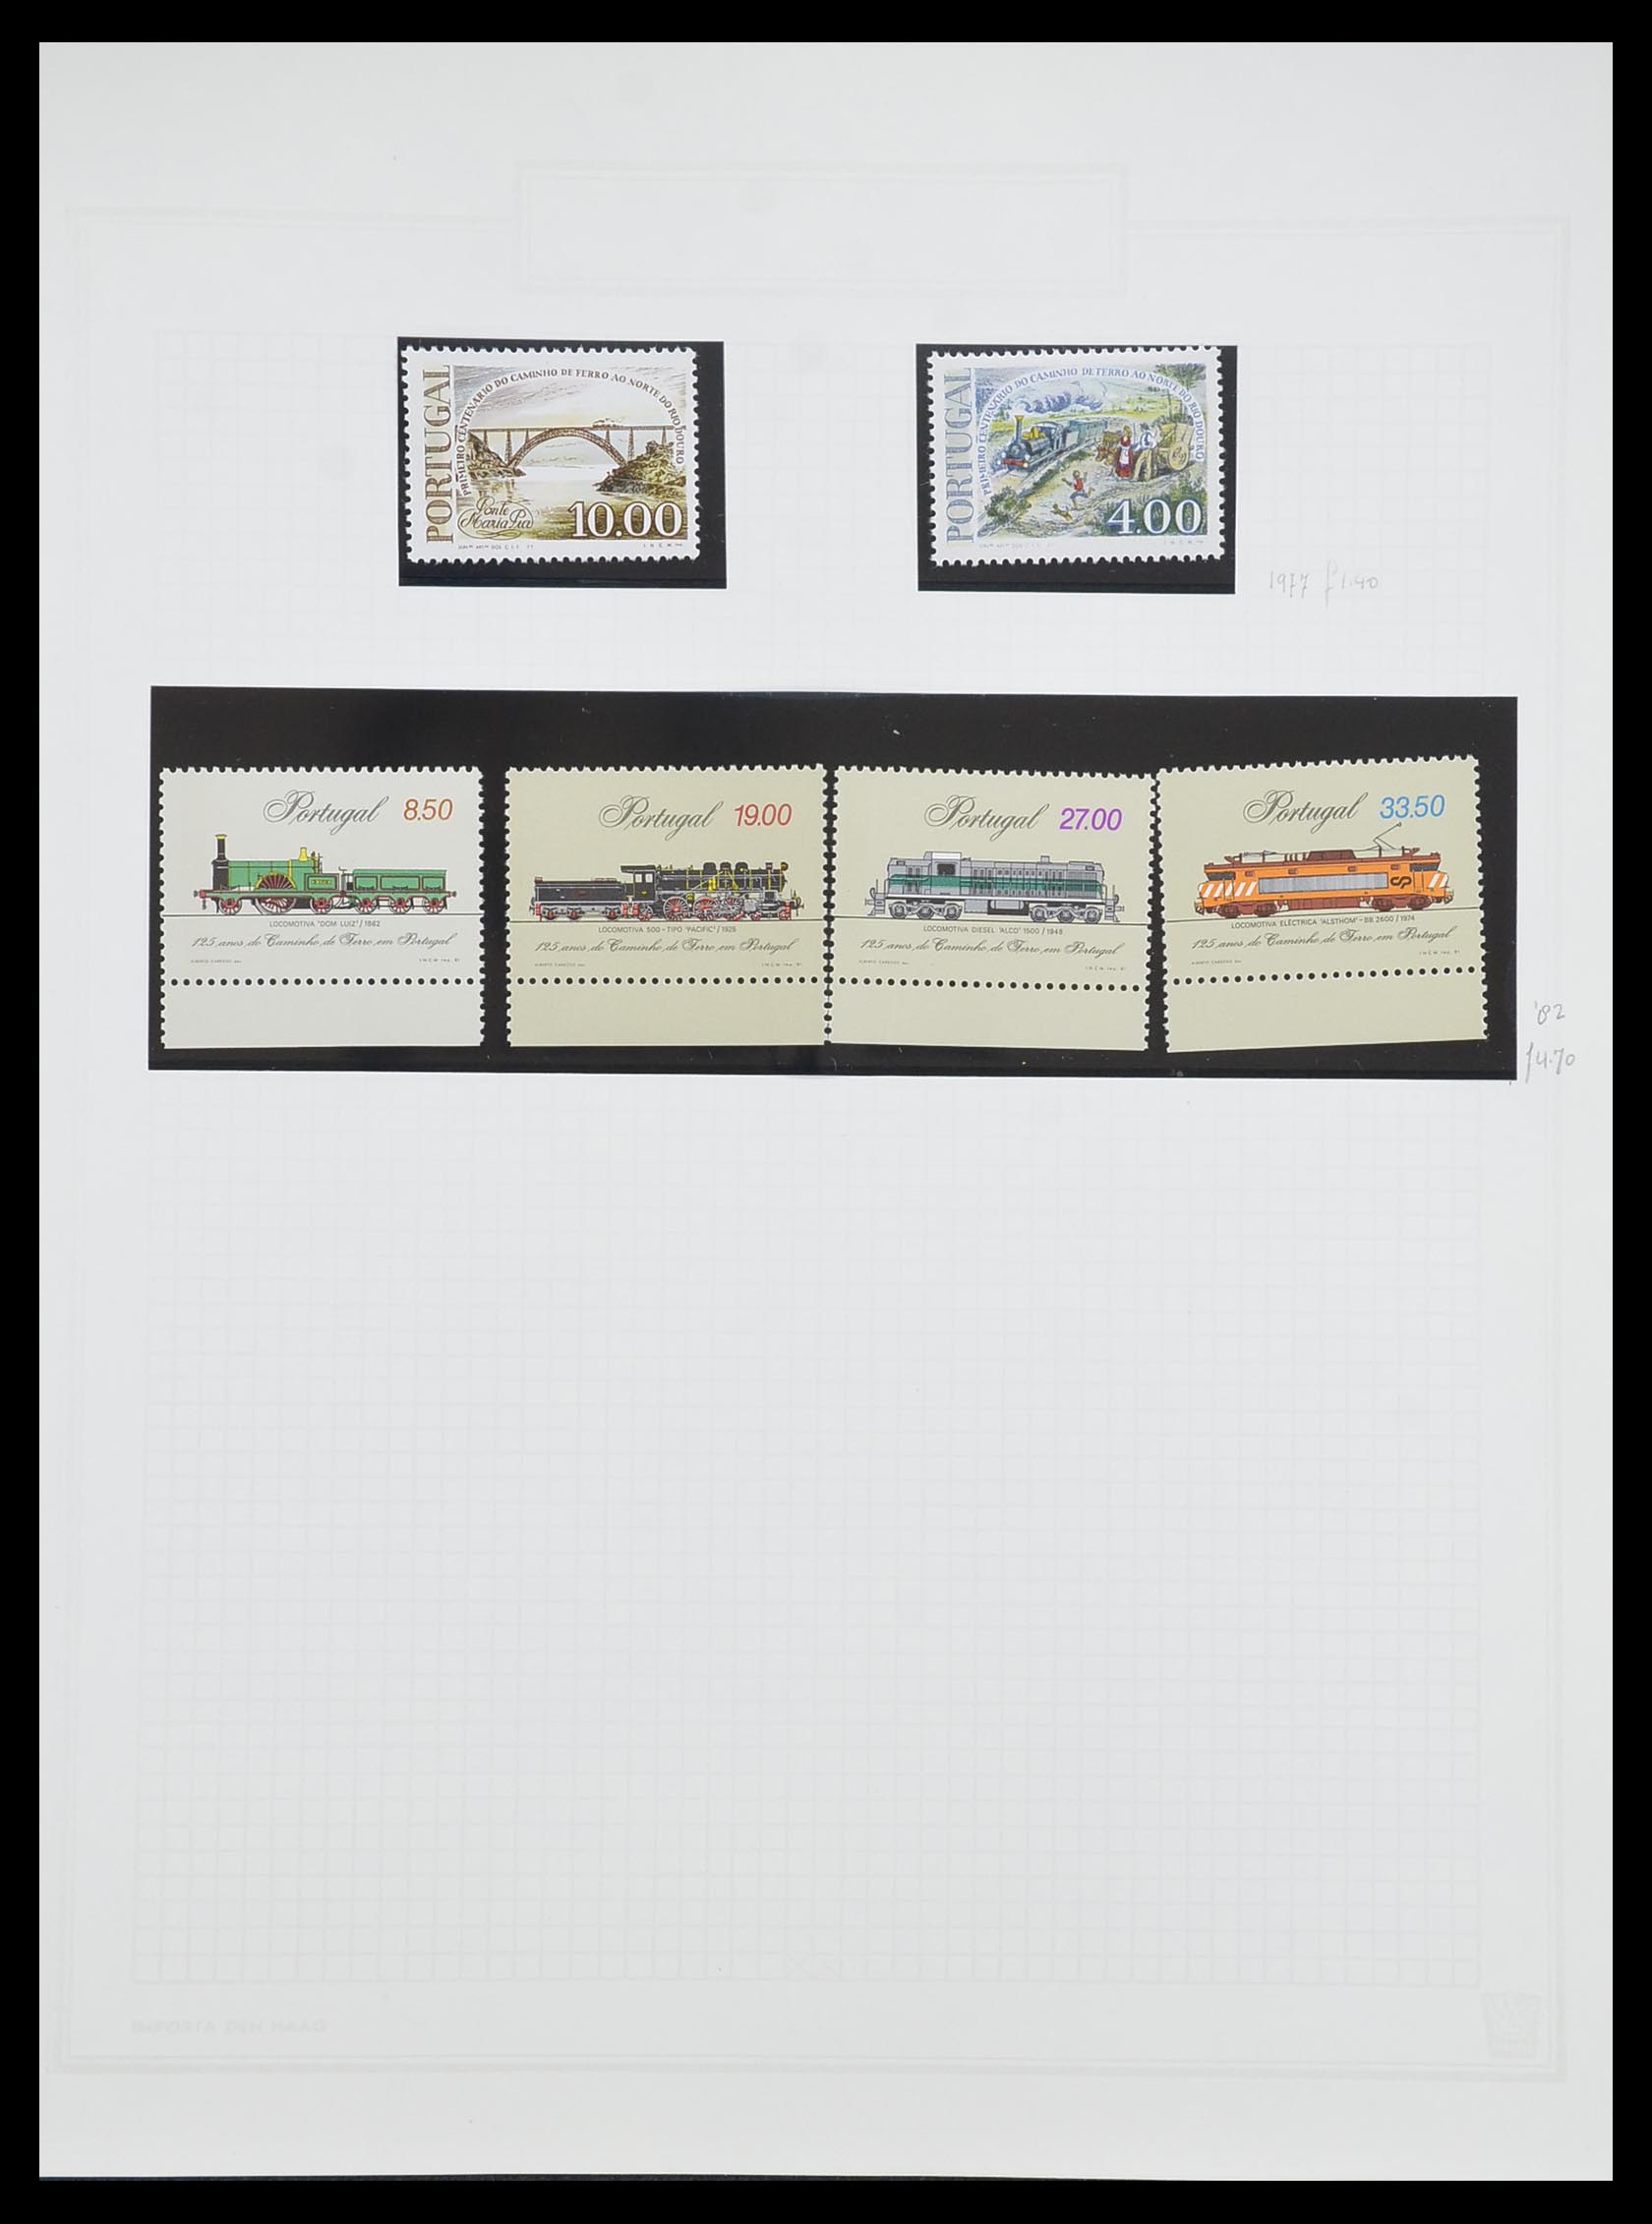 33755 0159 - Postzegelverzameling 33755 Motief treinen 1900-2010.